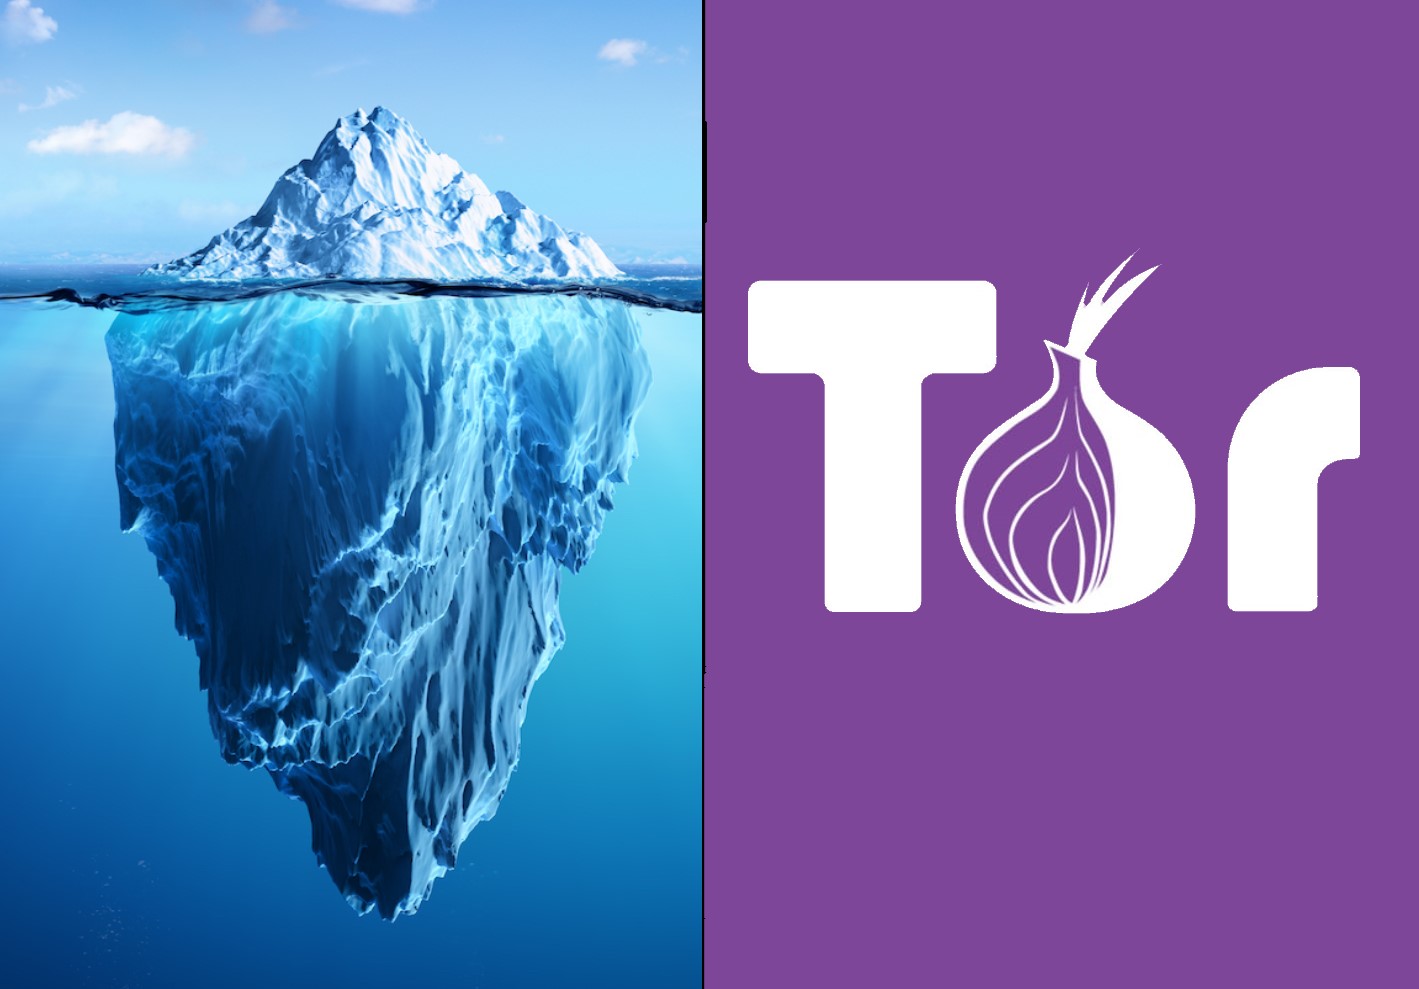 Tor Marketplace